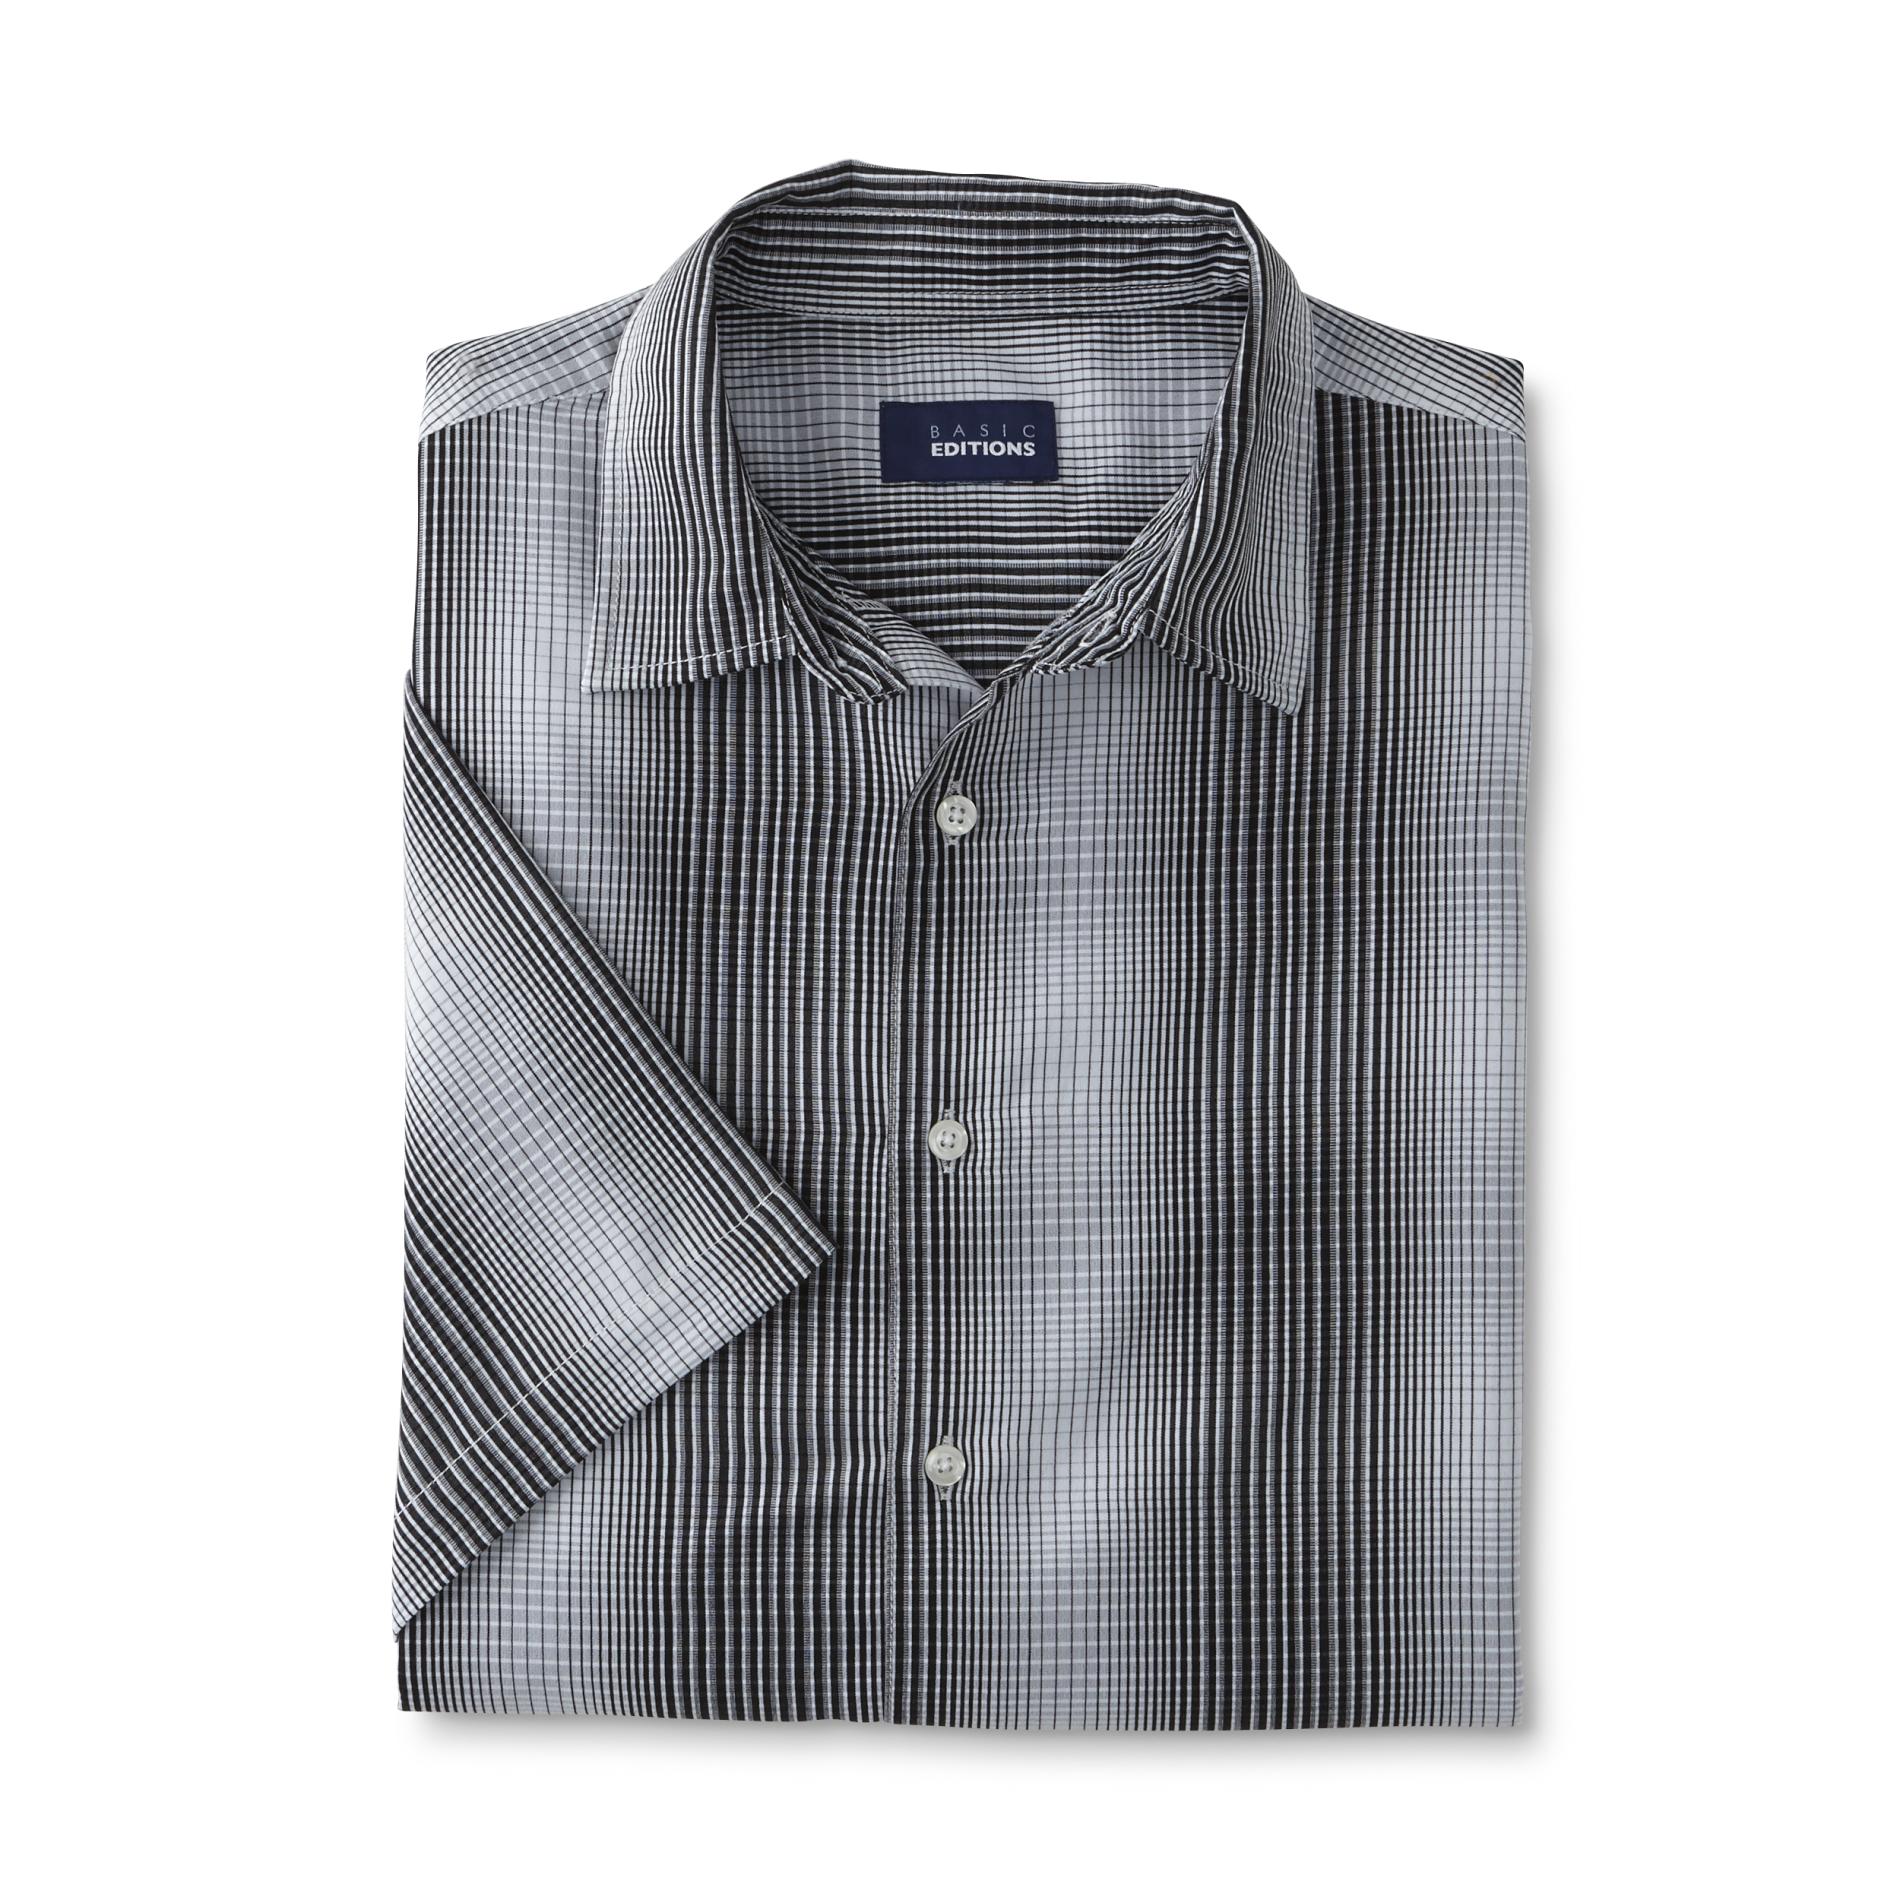 Basic Editions Men's Big & Tall Short-Sleeve Microfiber Shirt - Striped